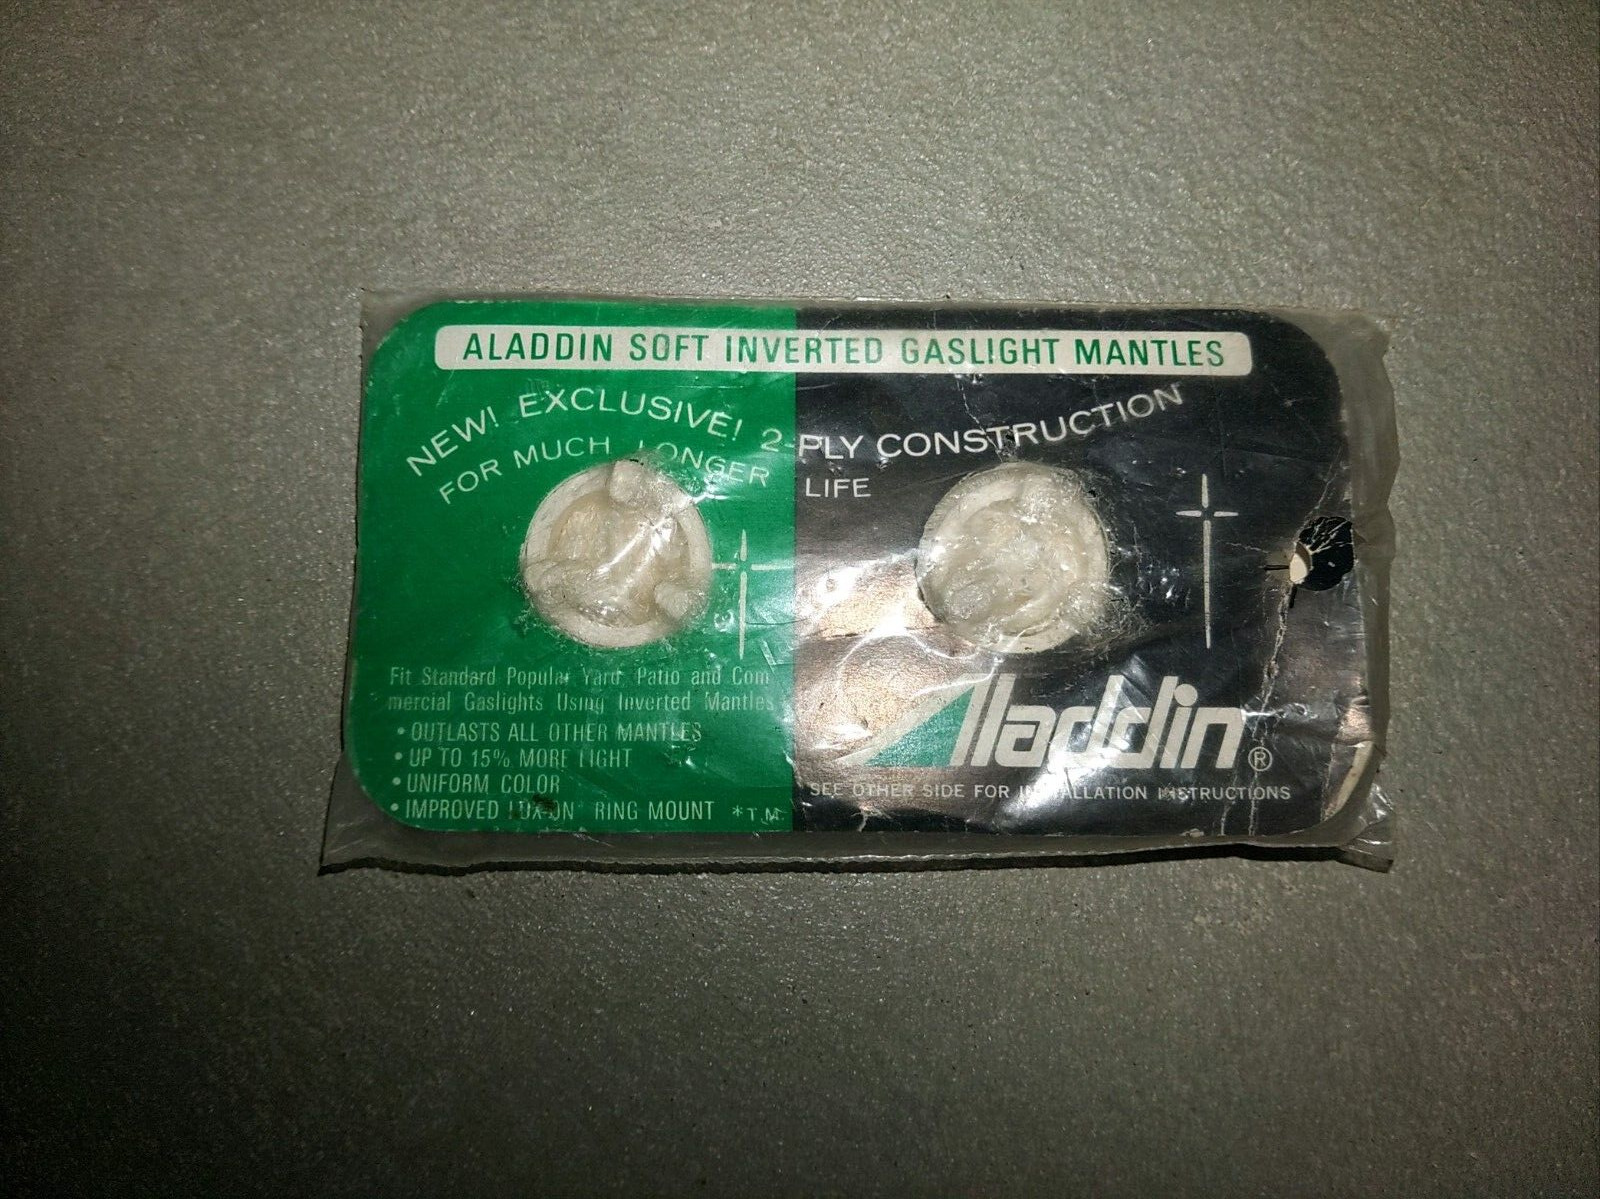 Vintage Alladdin Thorium Soft Inverted Gaslight Mantles (Great Value)